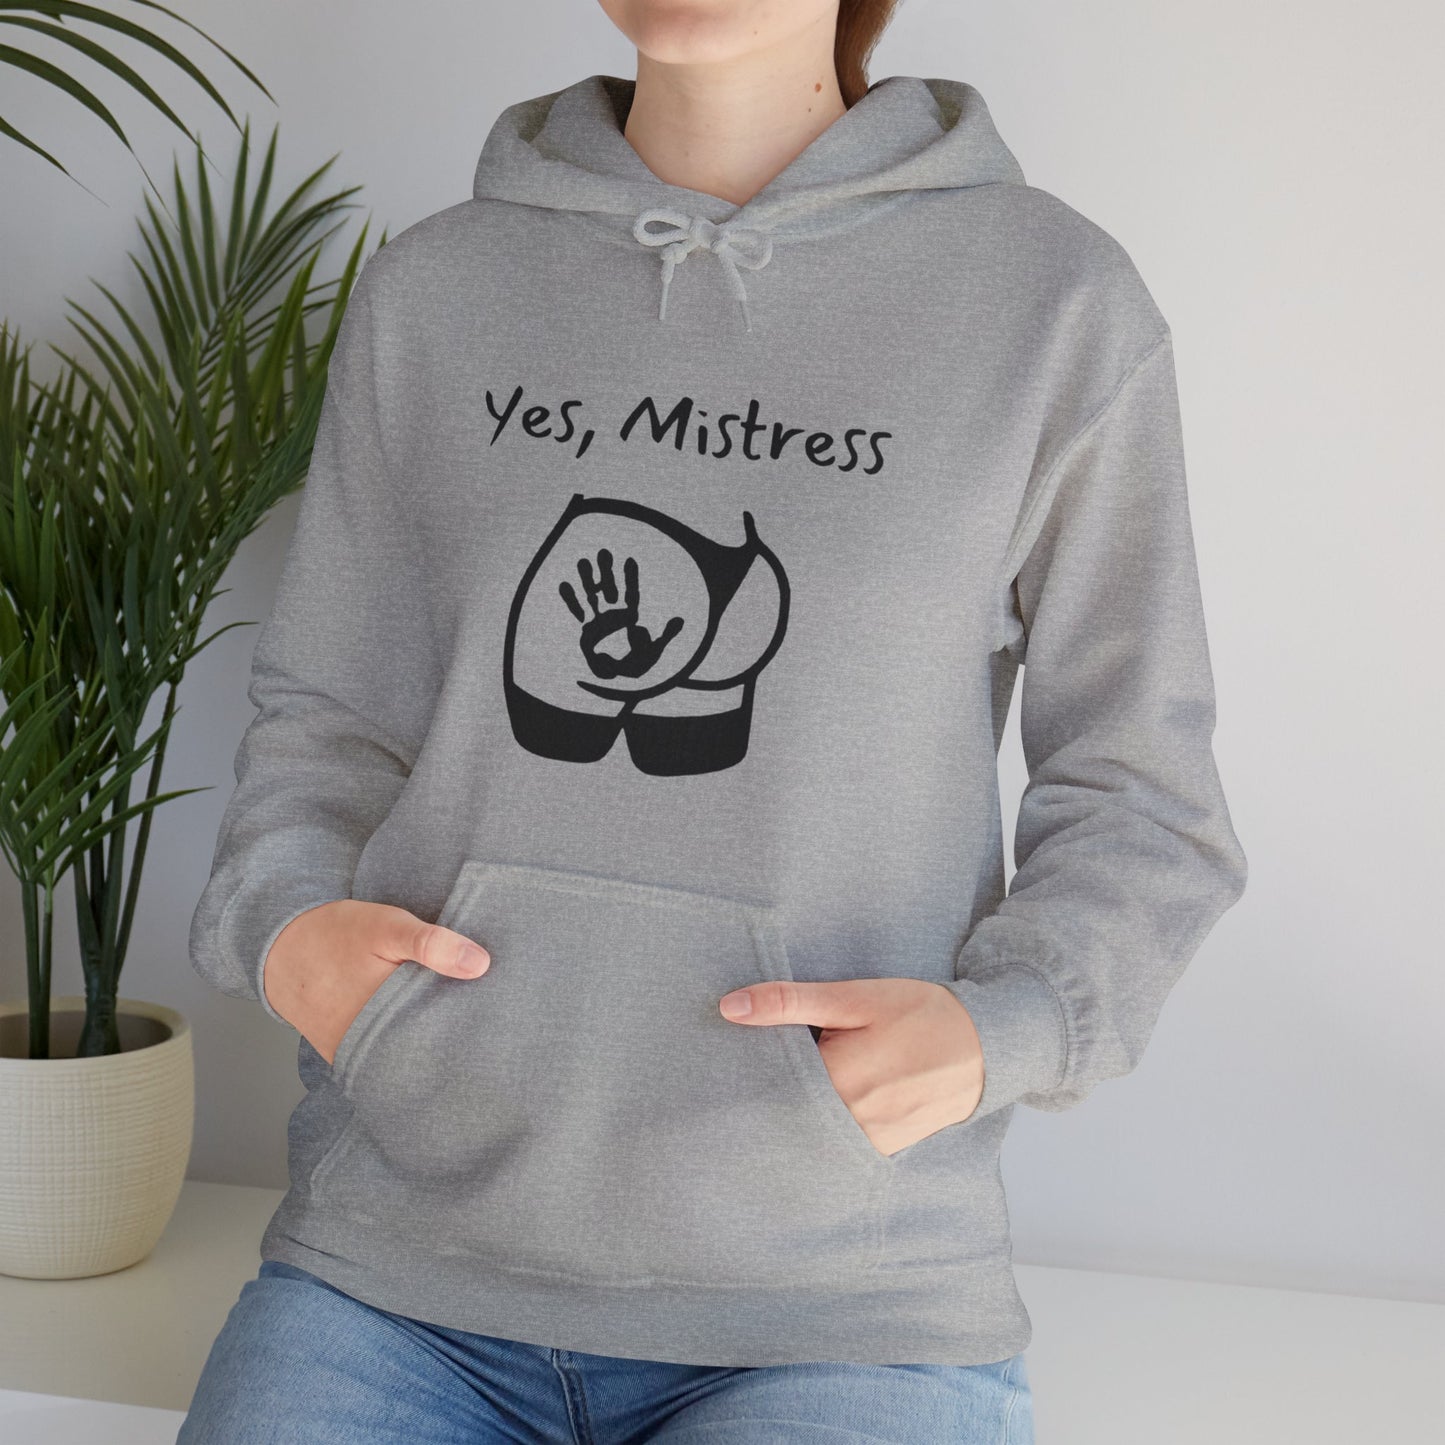 Yes, Mistress Unisex Hooded Sweatshirt